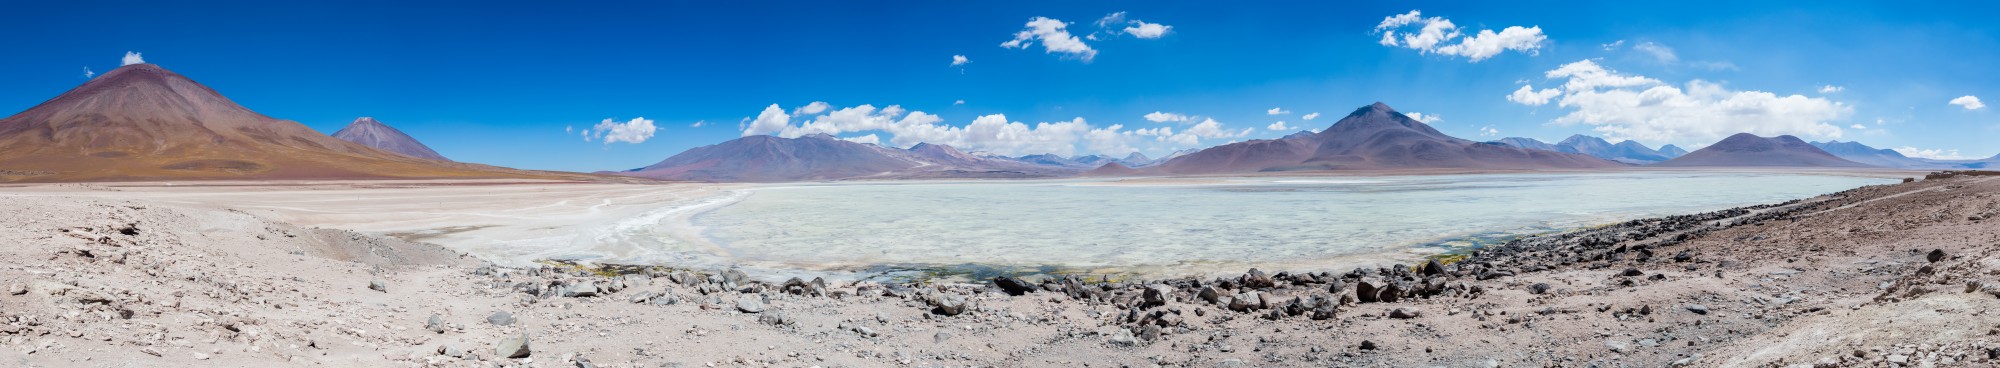 Laguna Blanca, Bolivia, 2016-02-02, DD 14-19 PAN